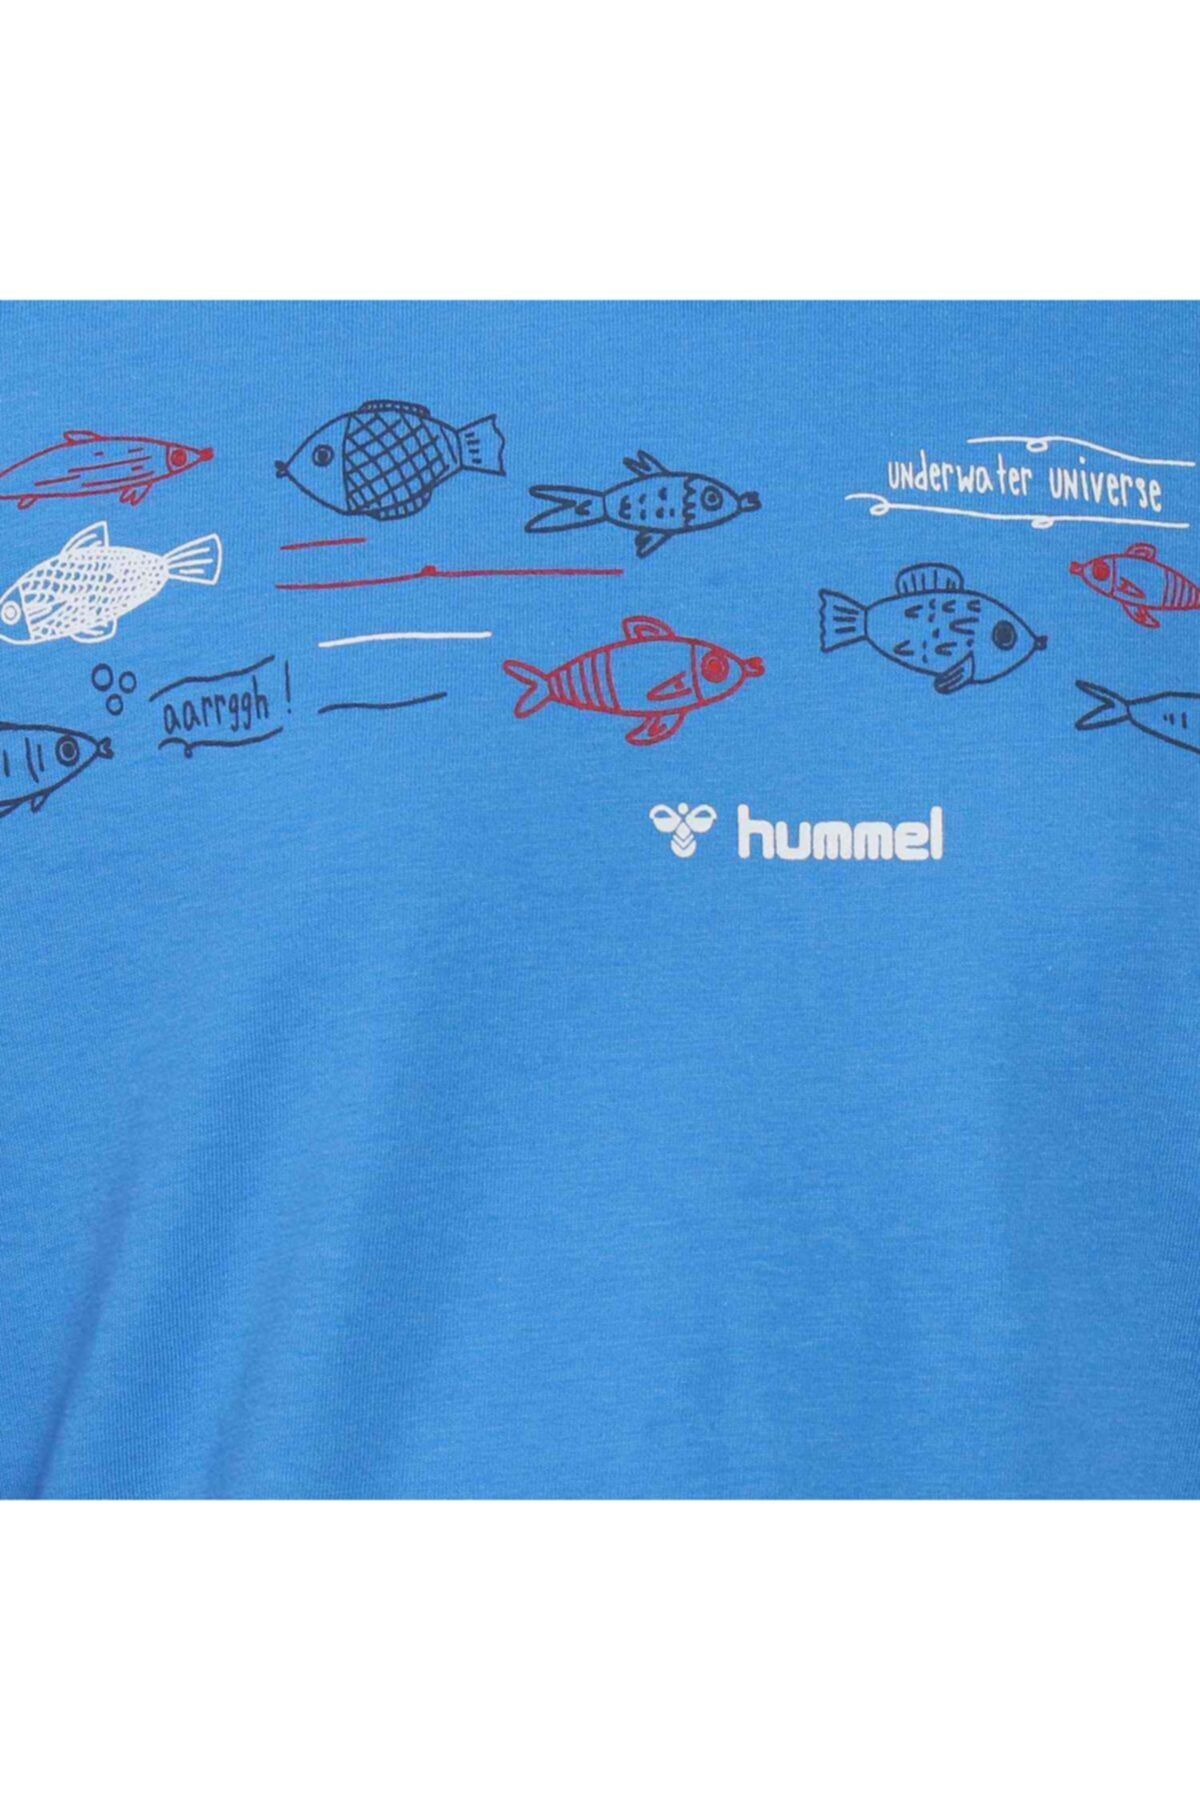 hummel تی شرت پسر آبی Hmlailor 101085859